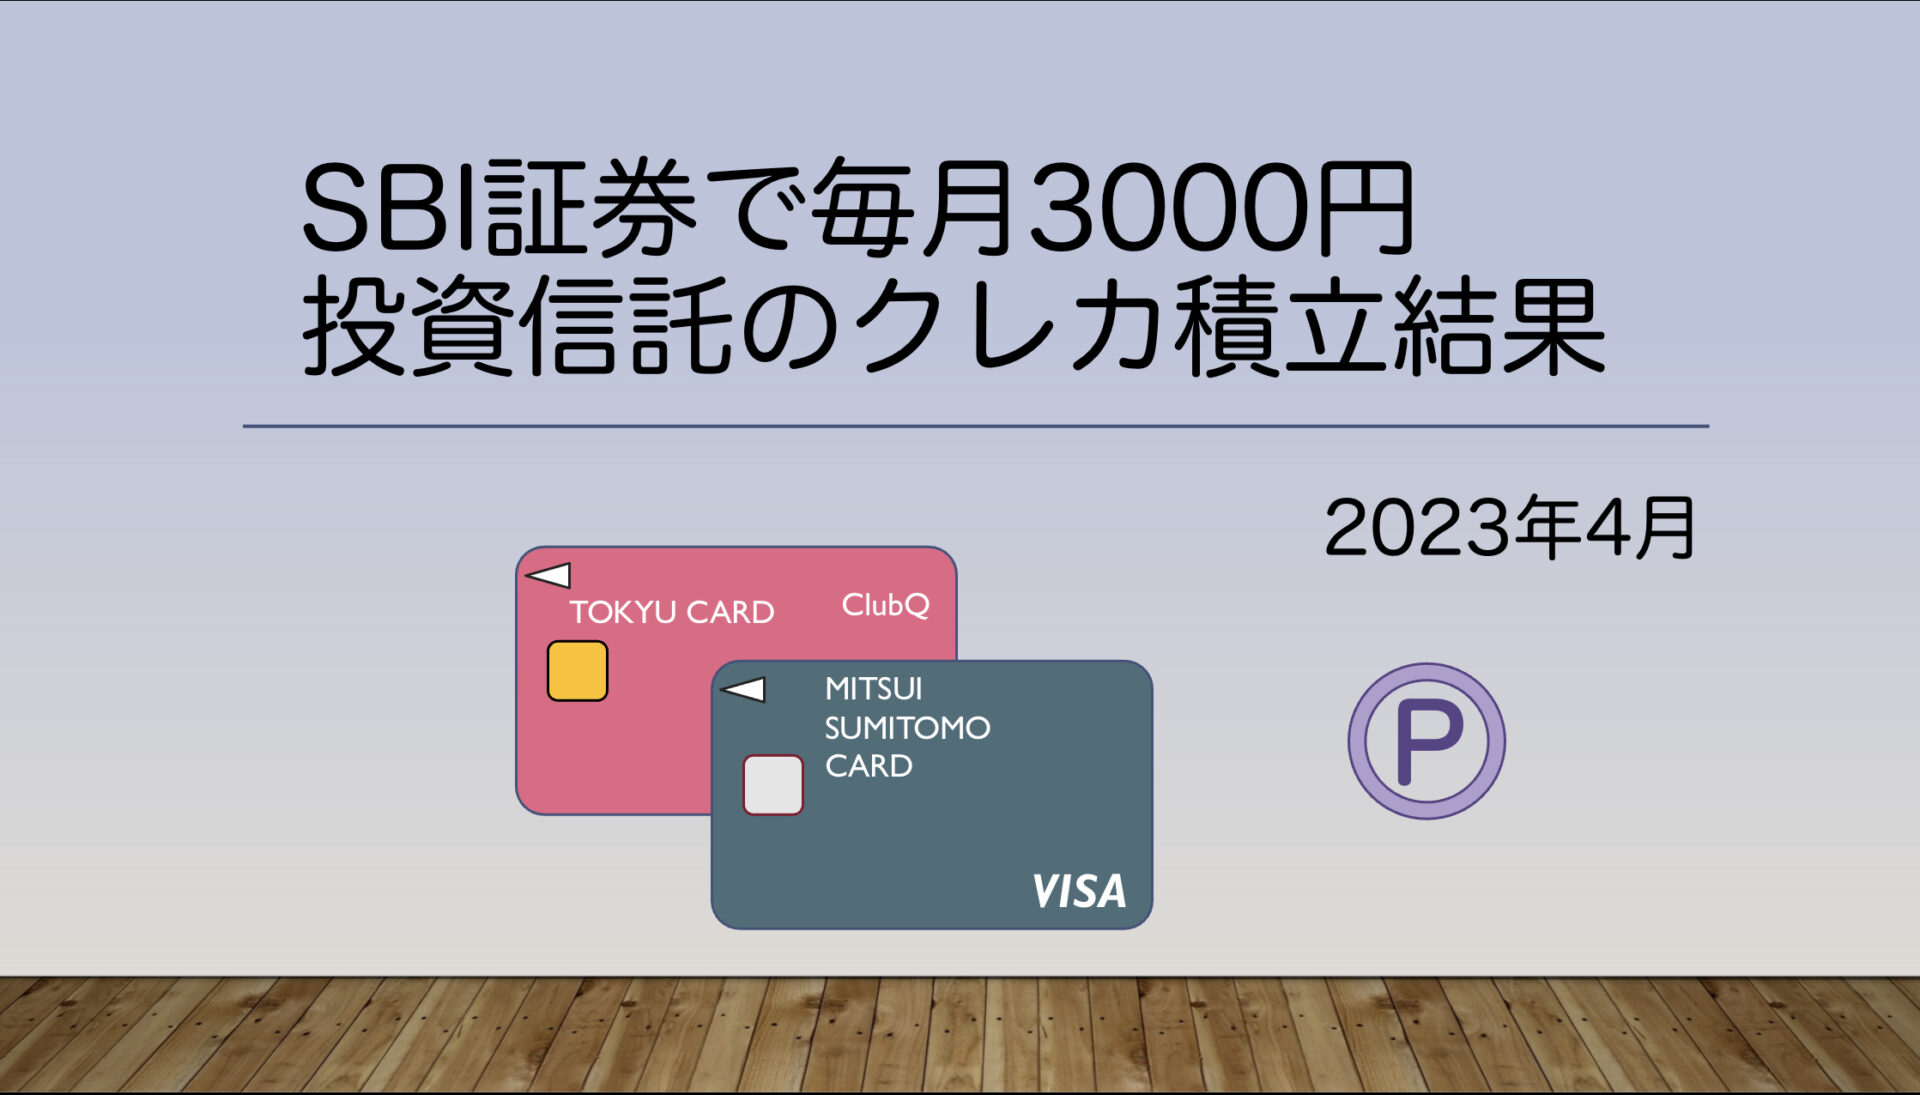 【SBI証券】三井住友カードによる投資信託のクレカ積立結果【2023年4月】